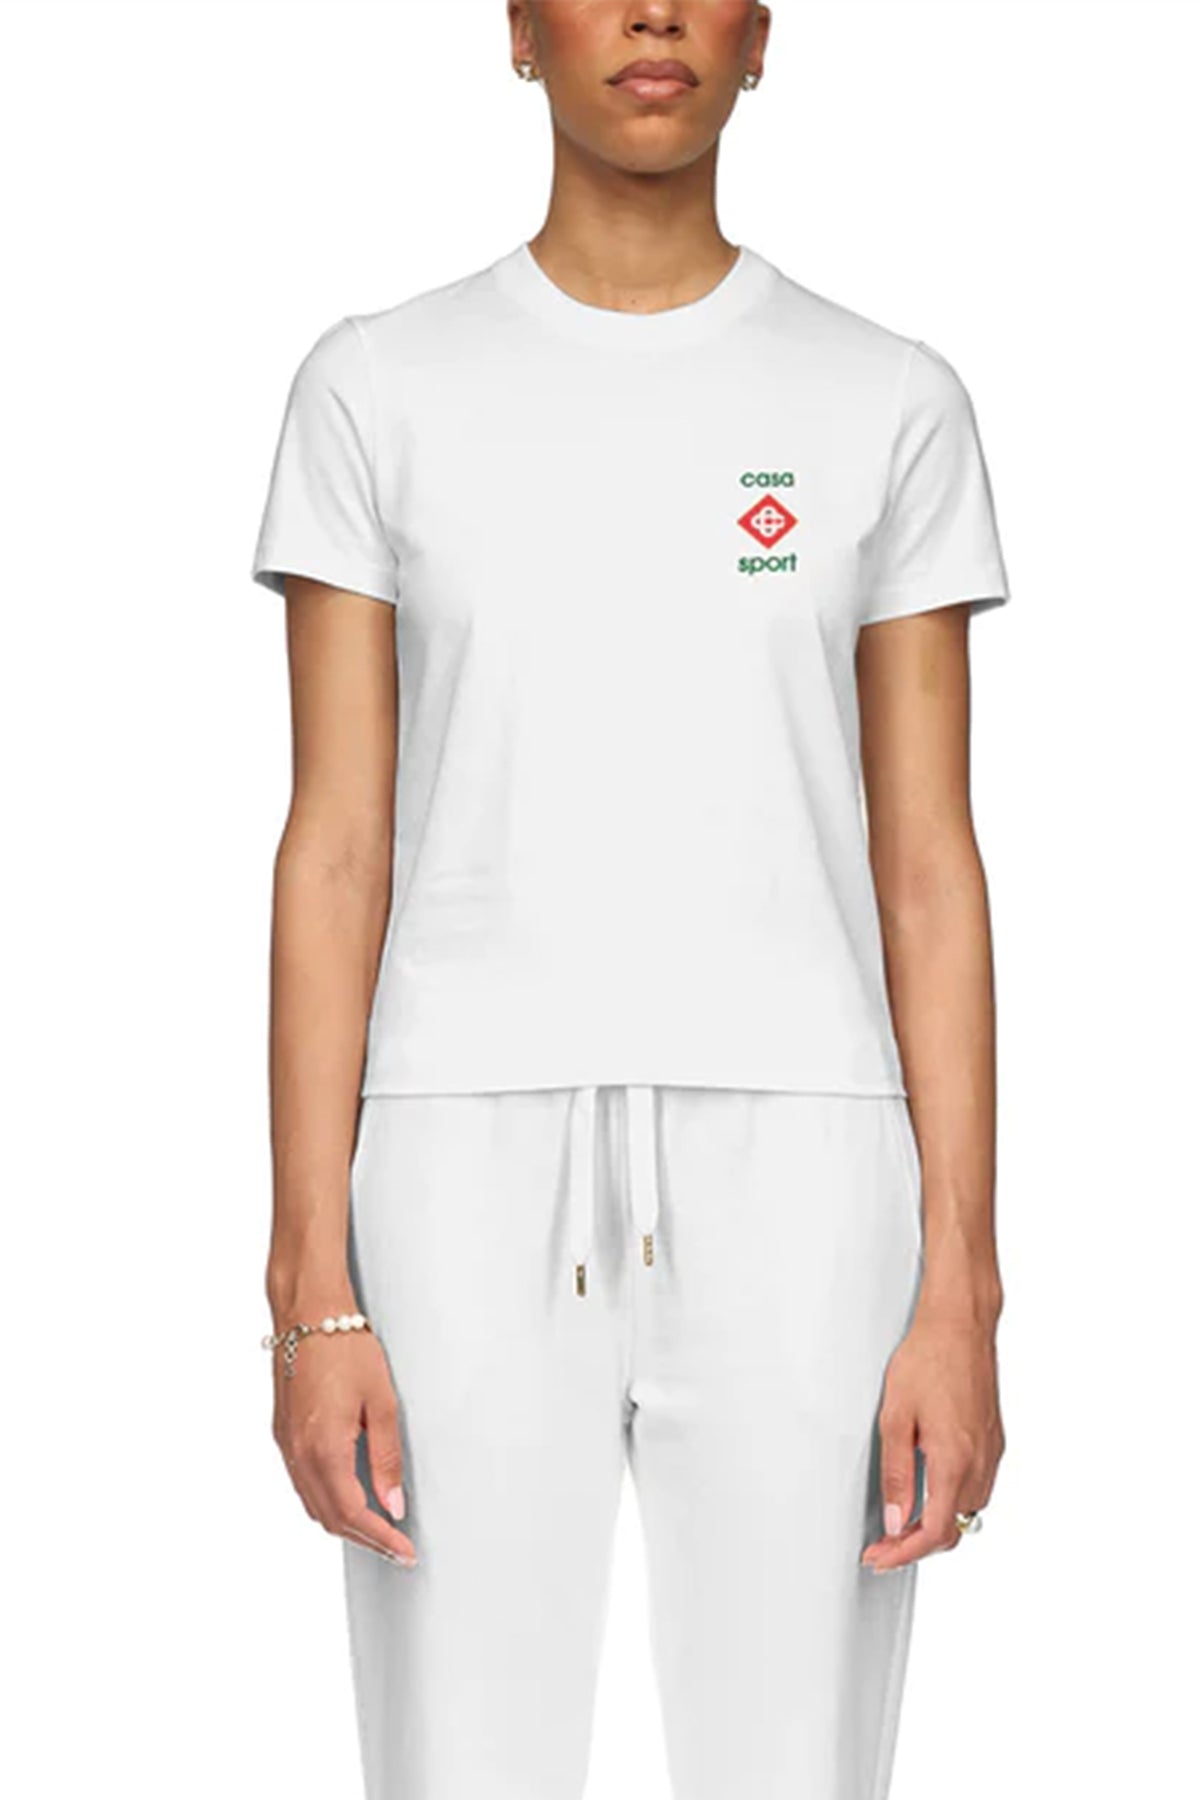 Casa Sport Icon T-Shirt in White - shop-olivia.com